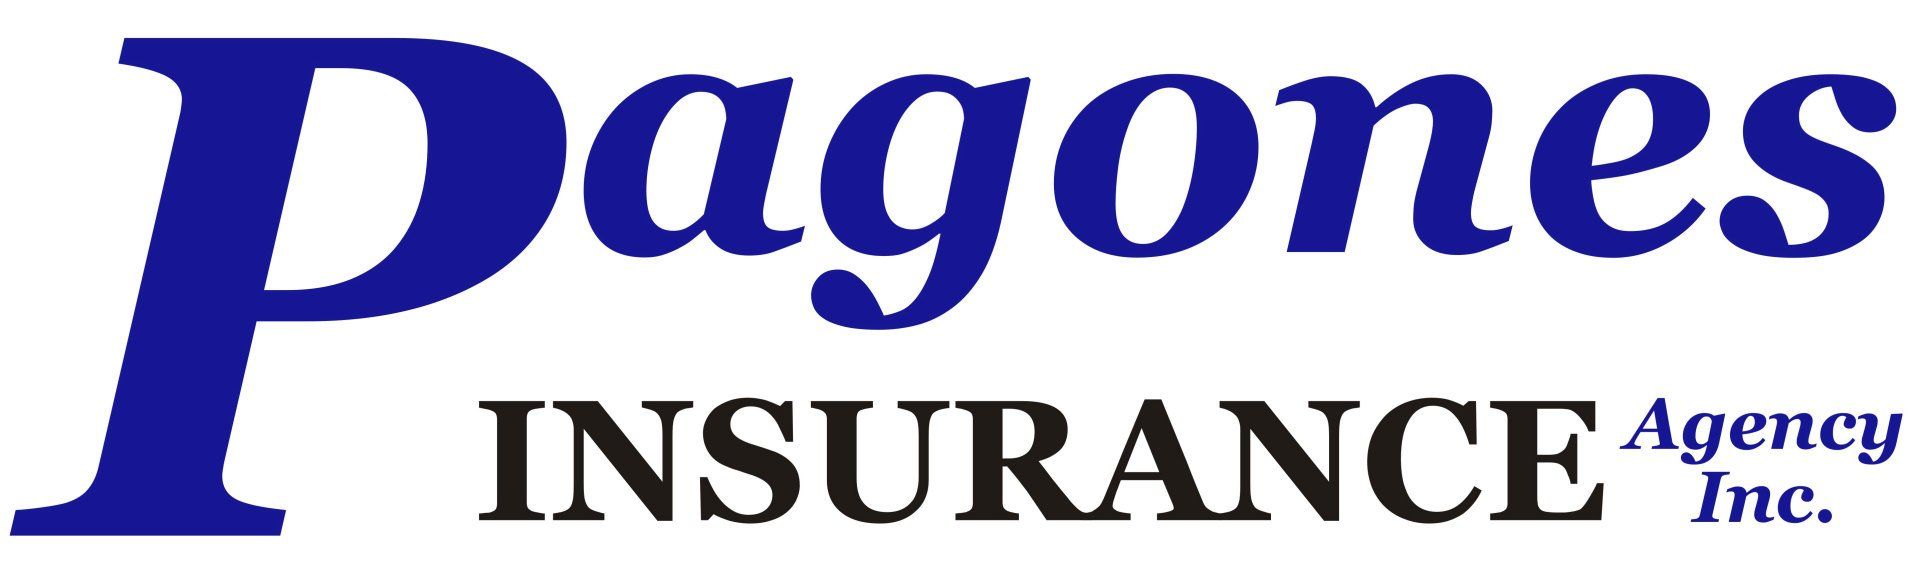 Pagones Insurance Agency Inc. - Logo